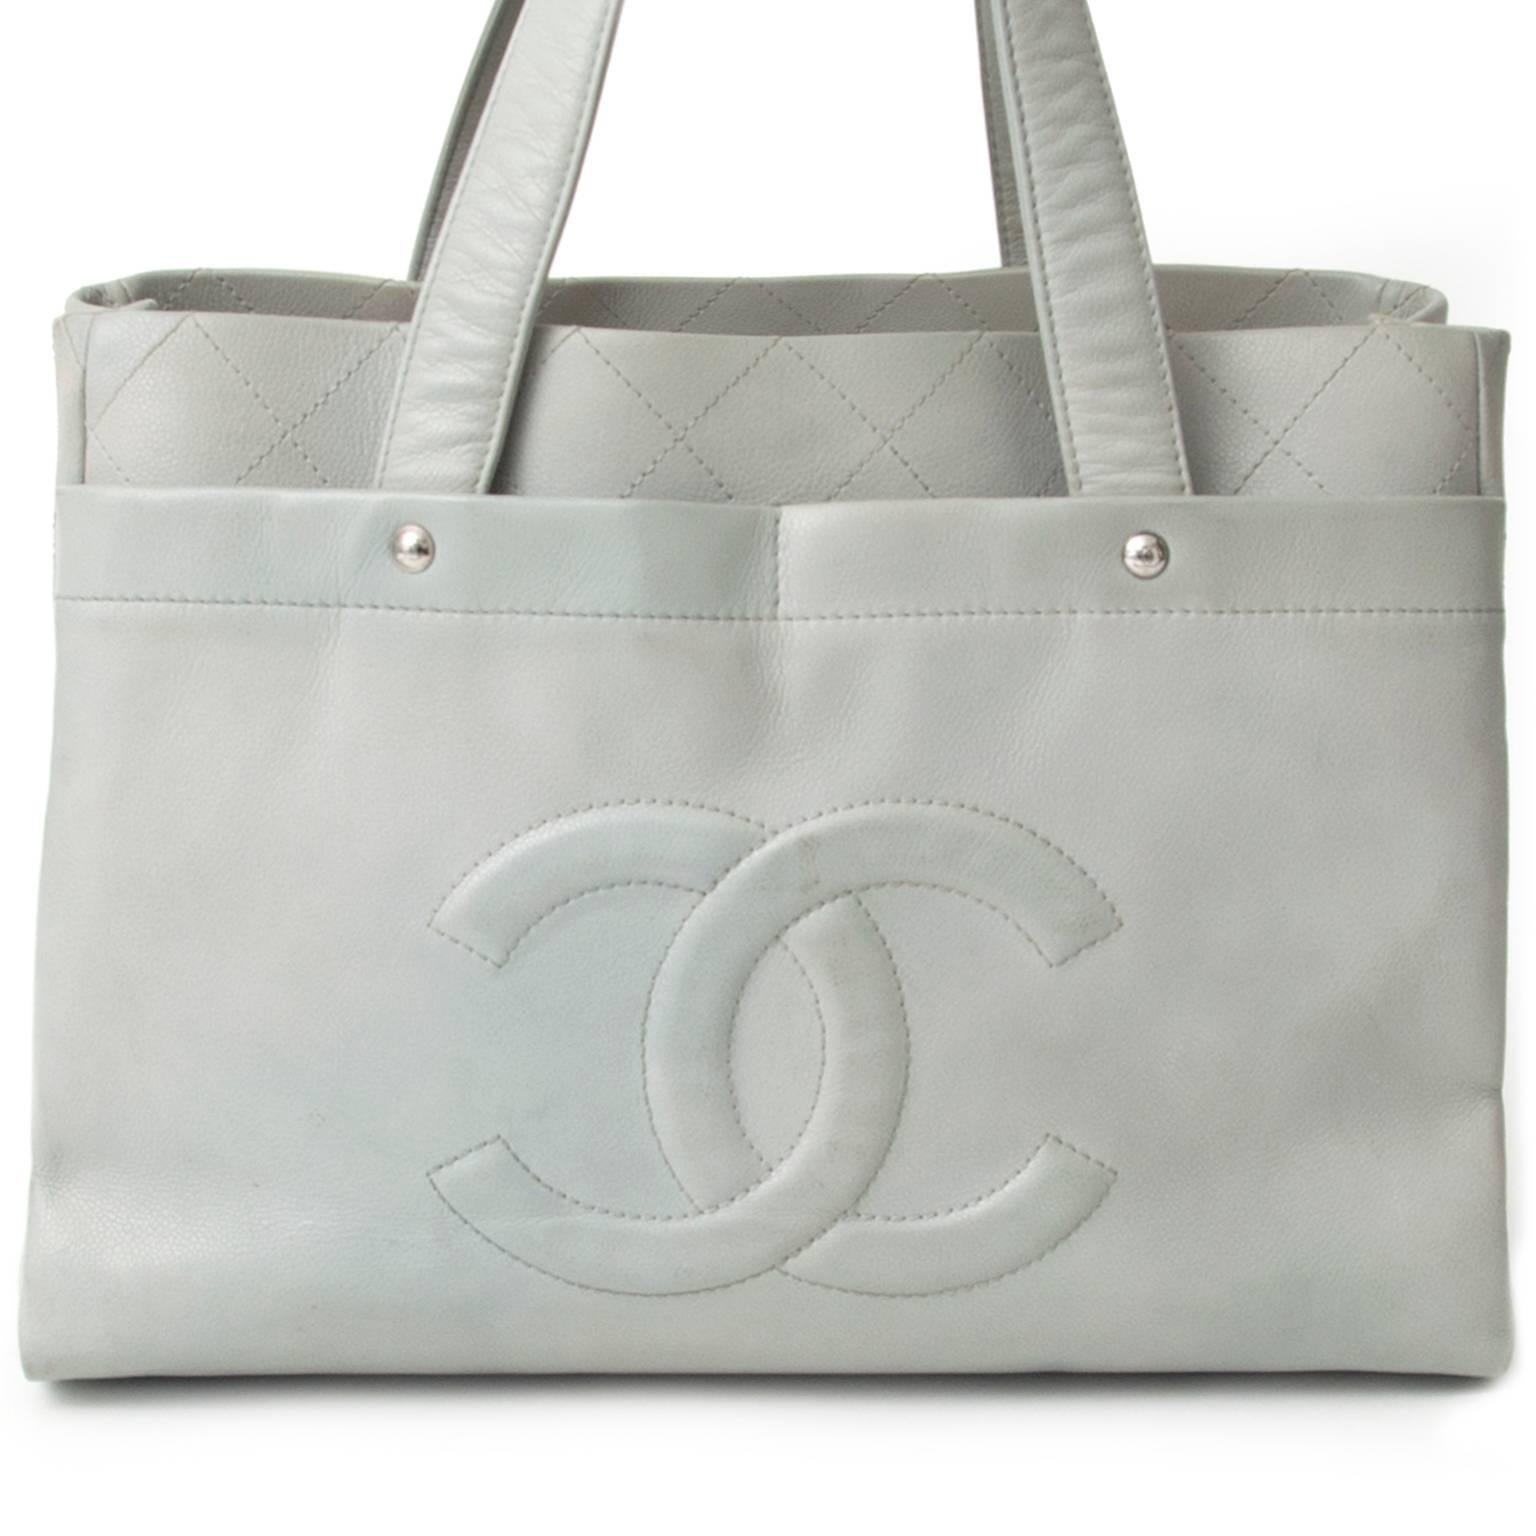 Women's Chanel Travel Bag in Blue/Grey